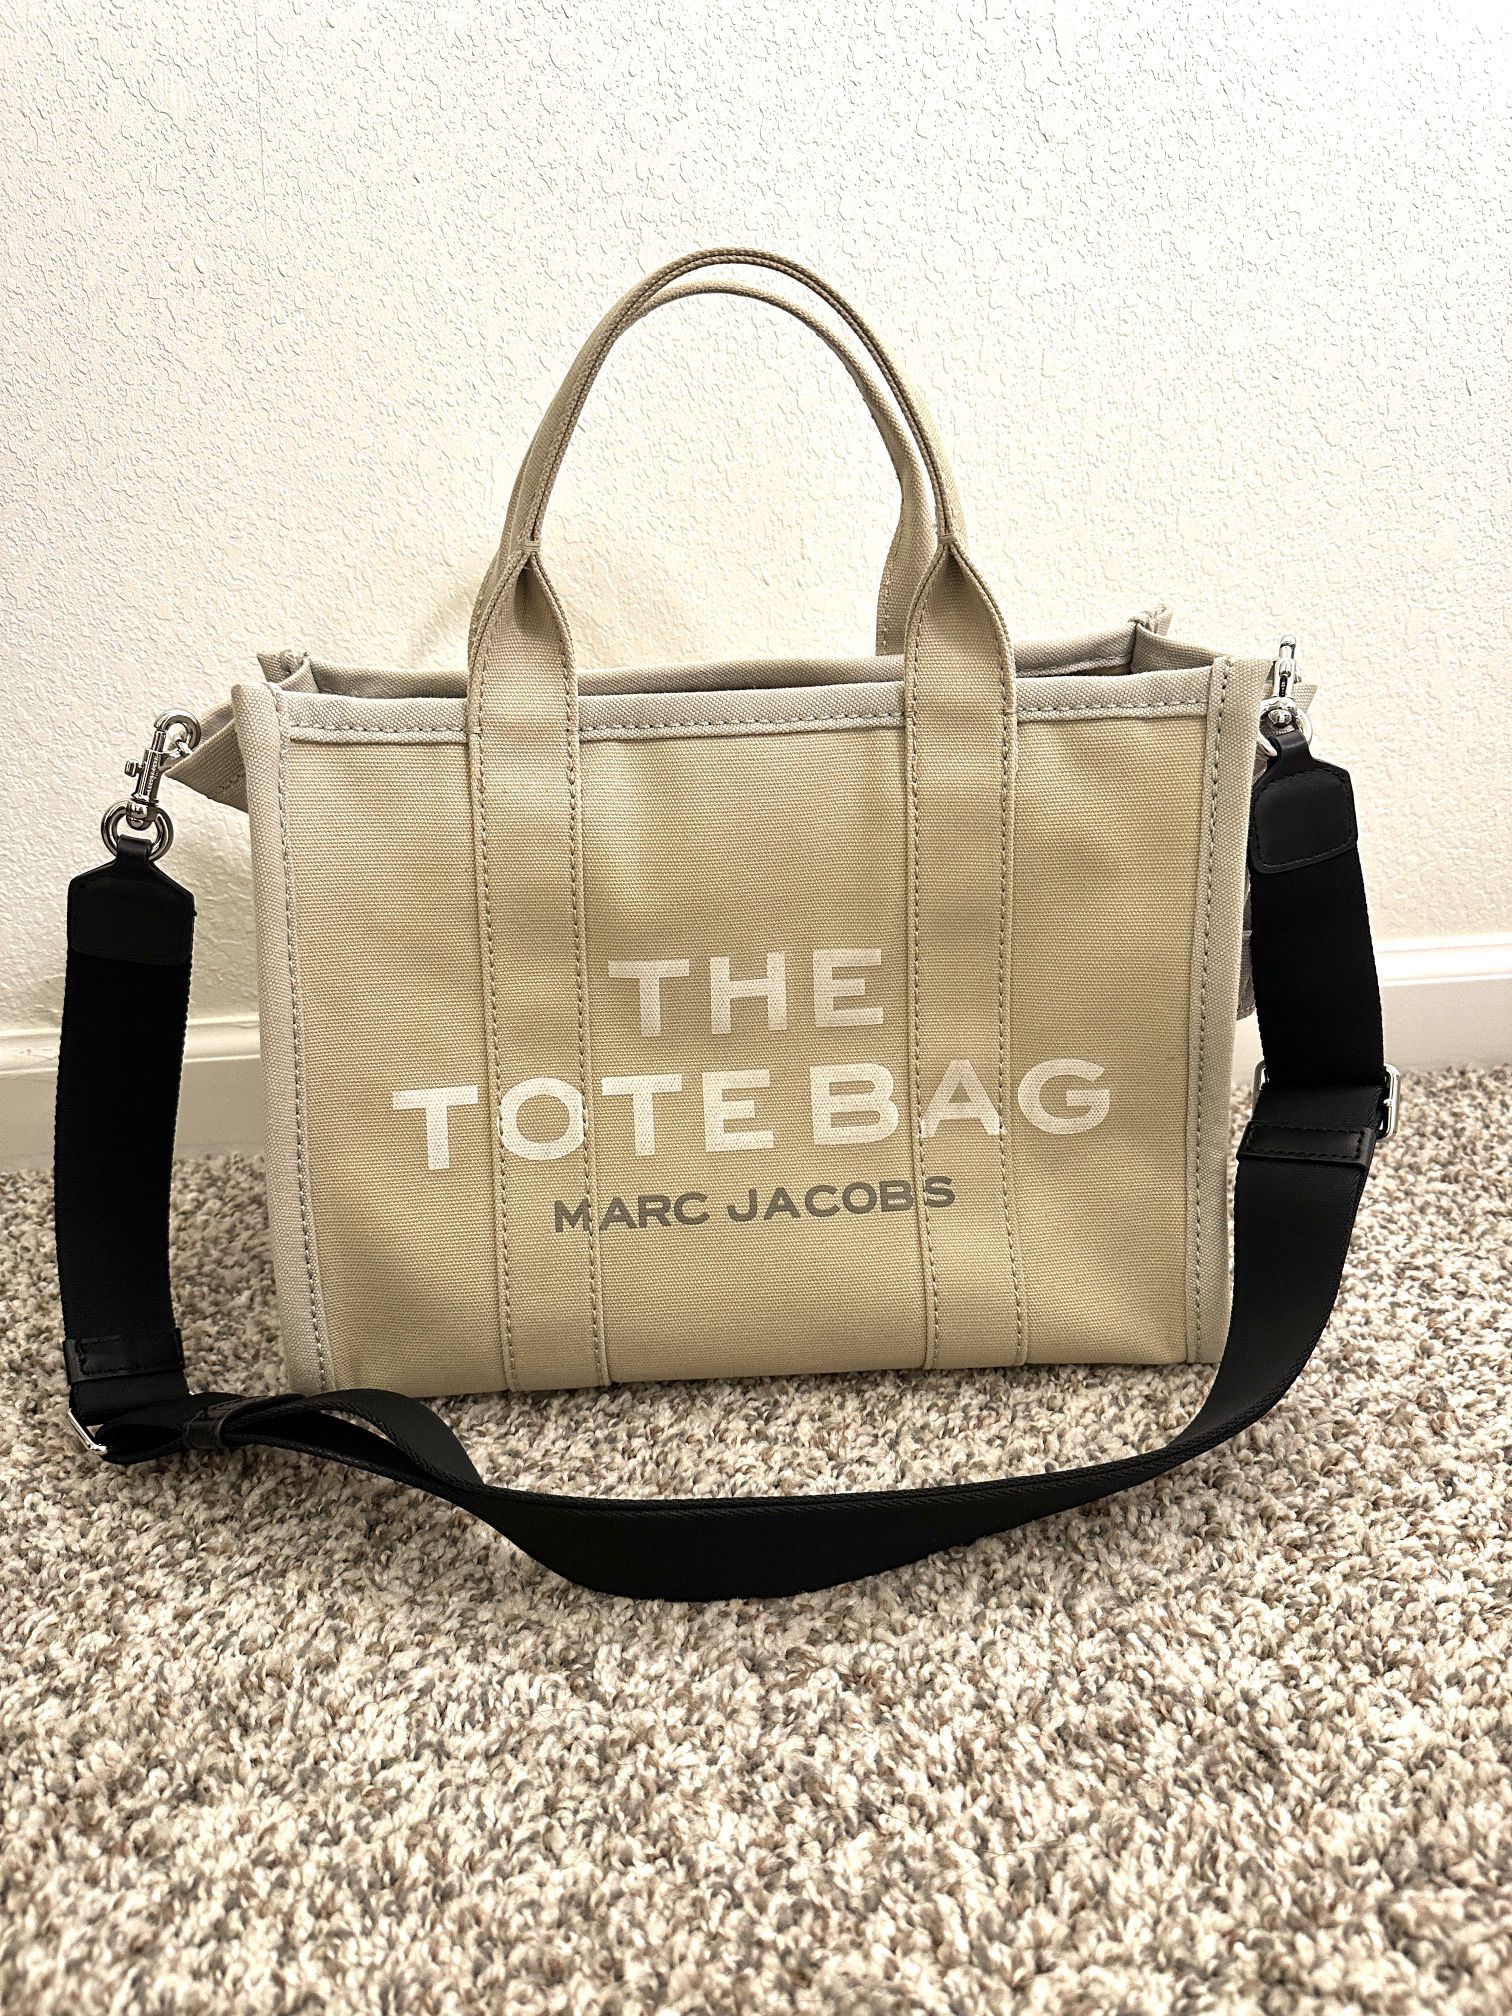 THE TOTE BAG MARC JACOBS (Medium) $220